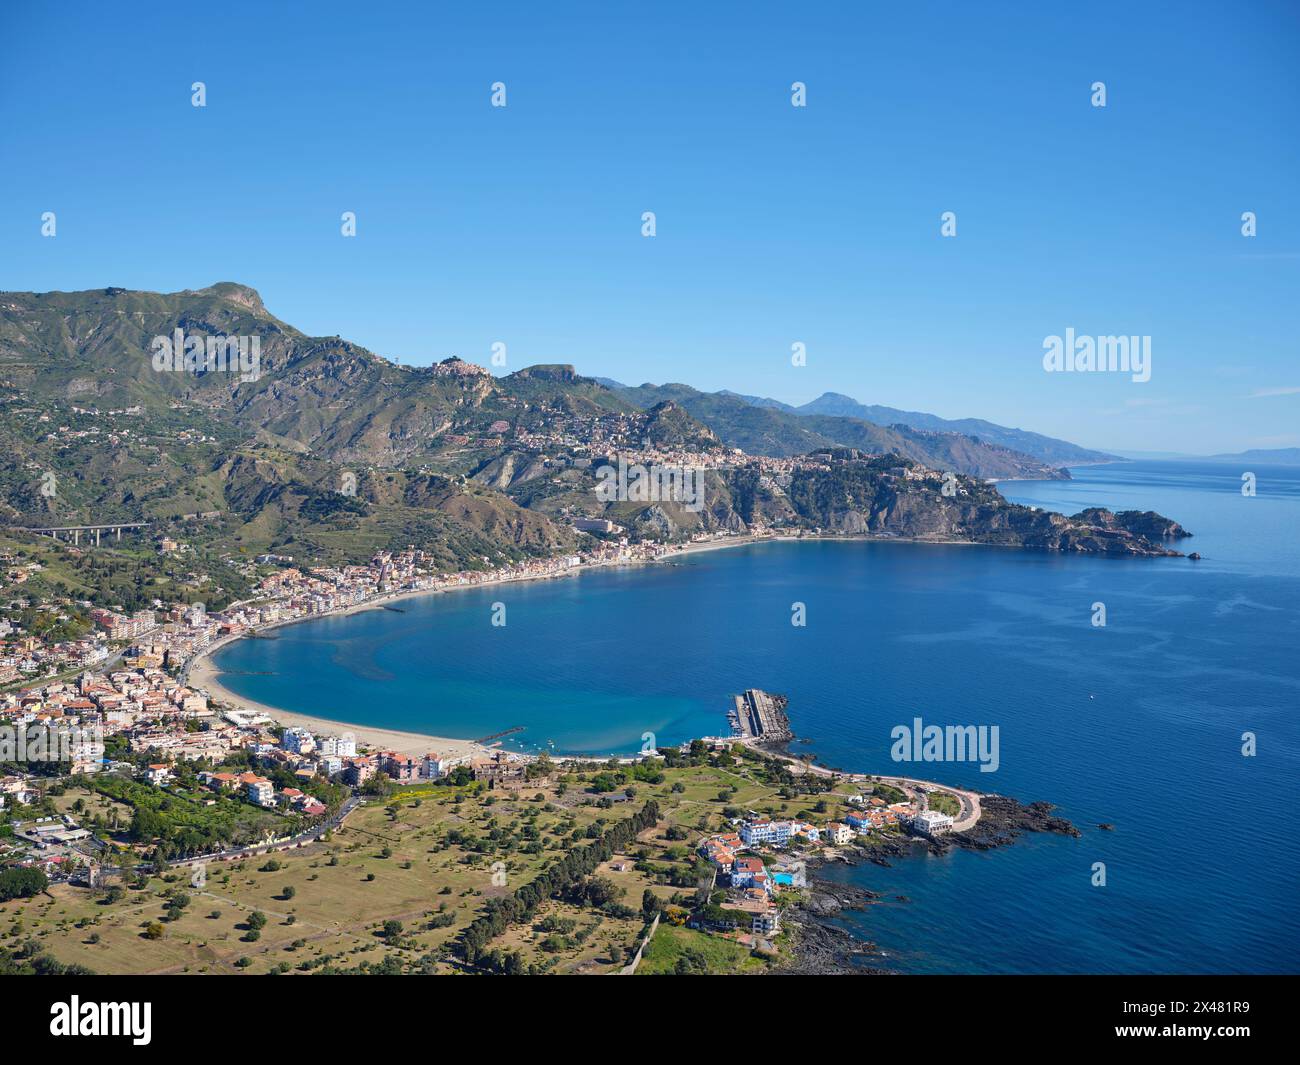 LUFTAUFNAHME. Die felsigen Vorgebirge von Taormina ragen ins Ionische Meer. Metropolitanstadt Messina, Sizilien, Italien. Stockfoto